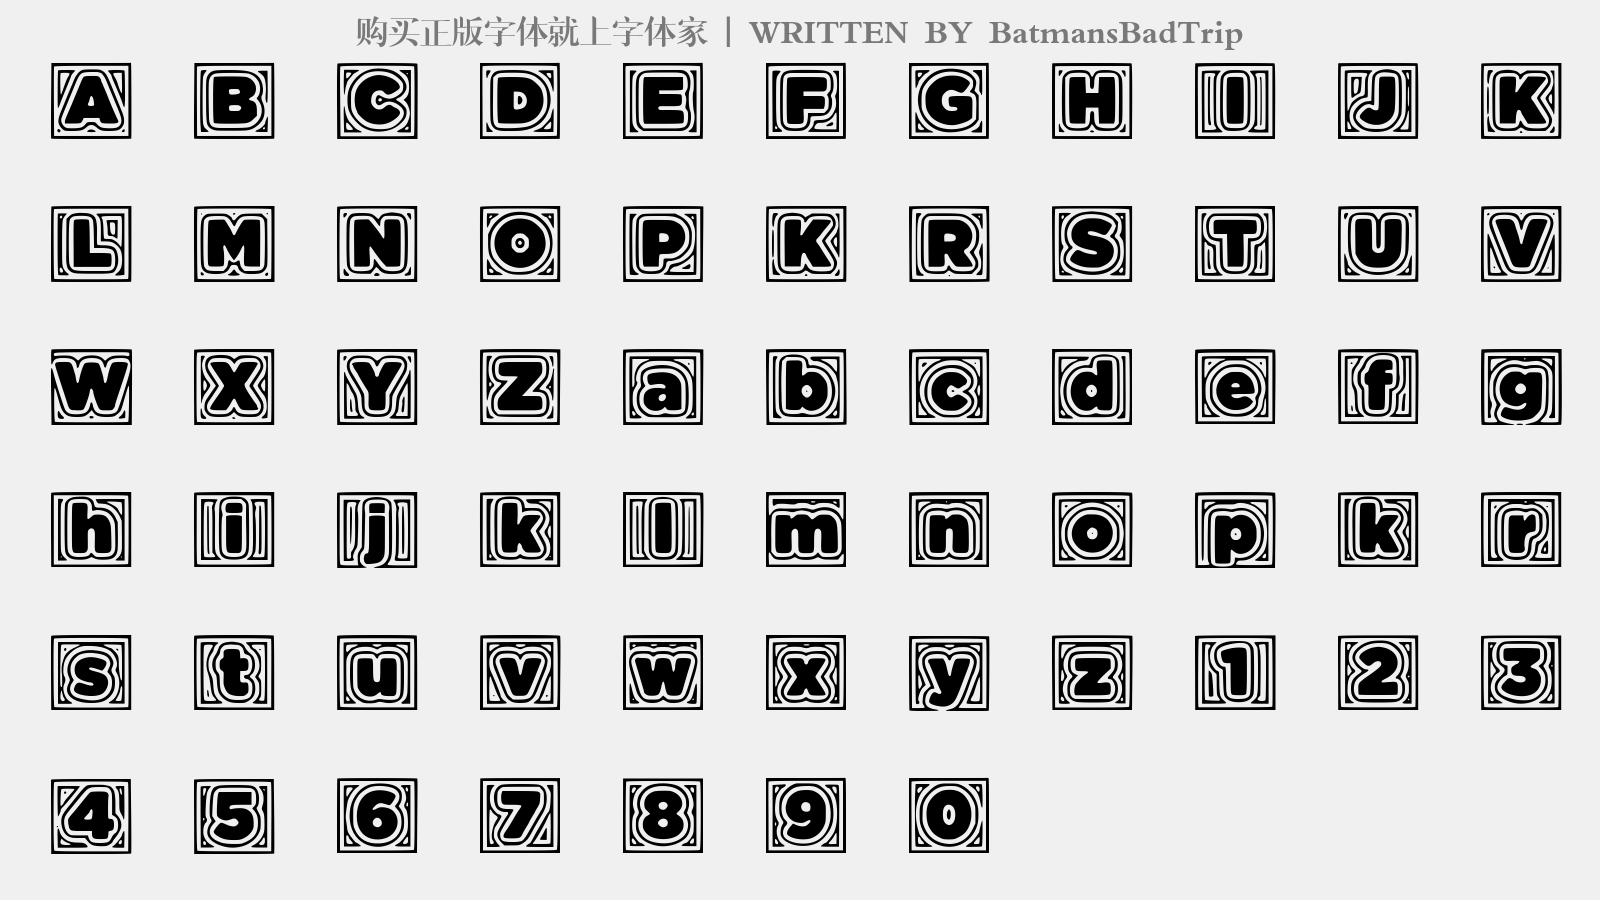 BatmansBadTrip - 大写字母/小写字母/数字